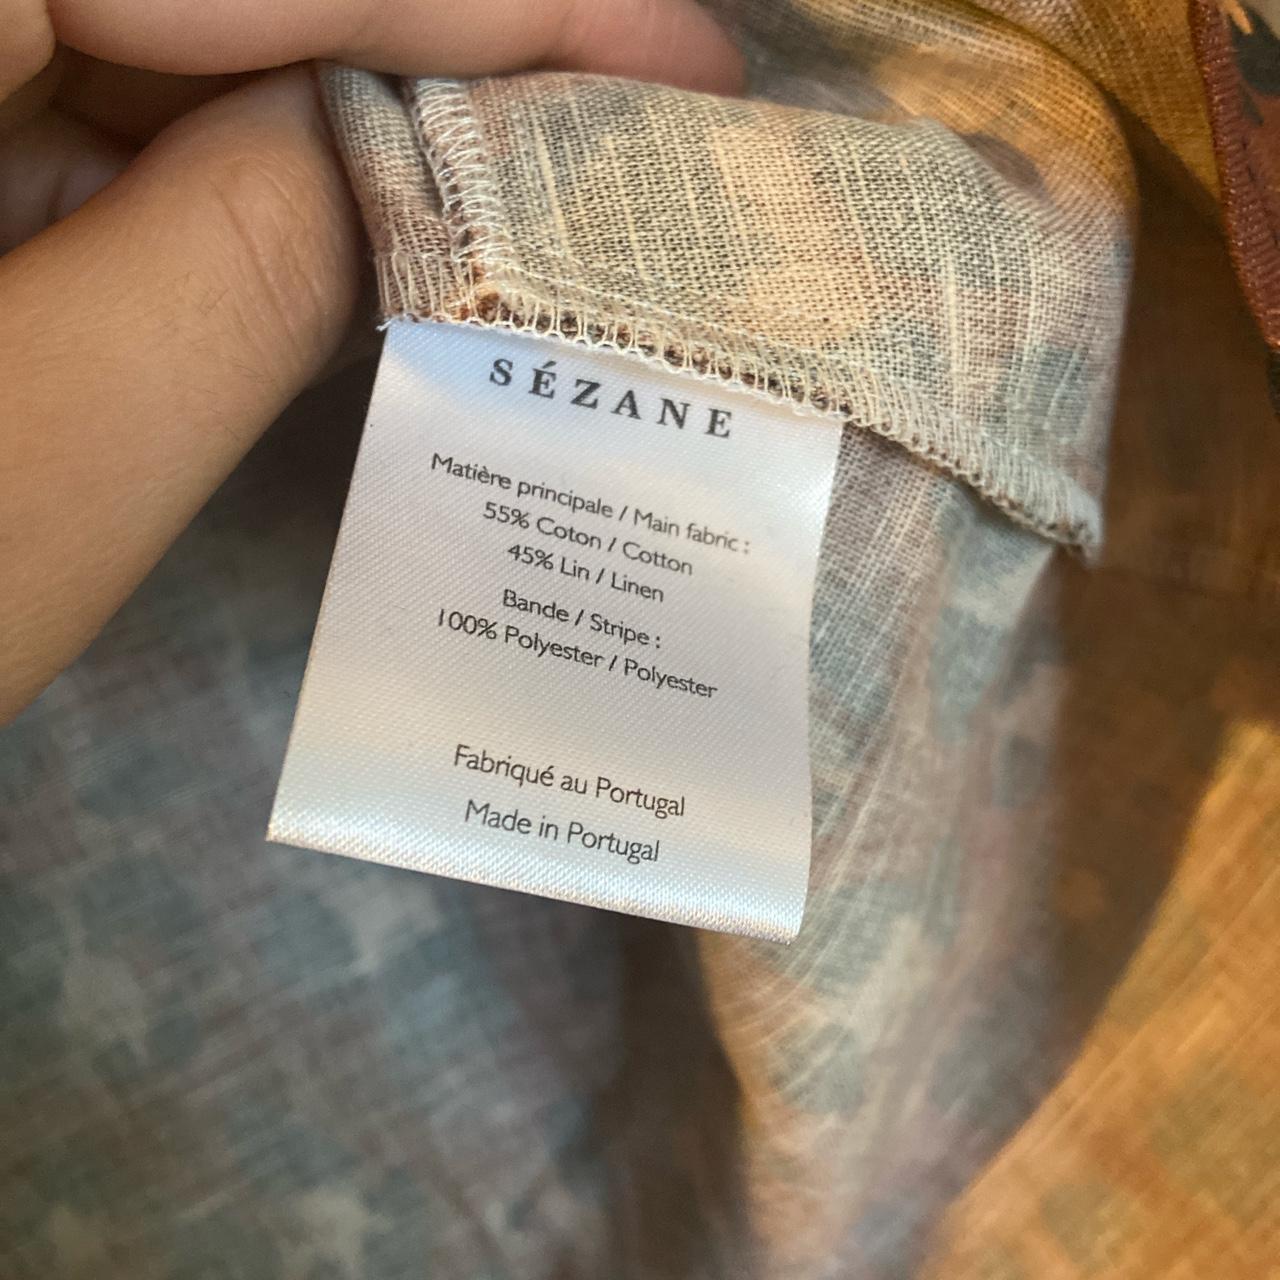 Sezane clarita blouse leopard Main fabric : 55% /... - Depop